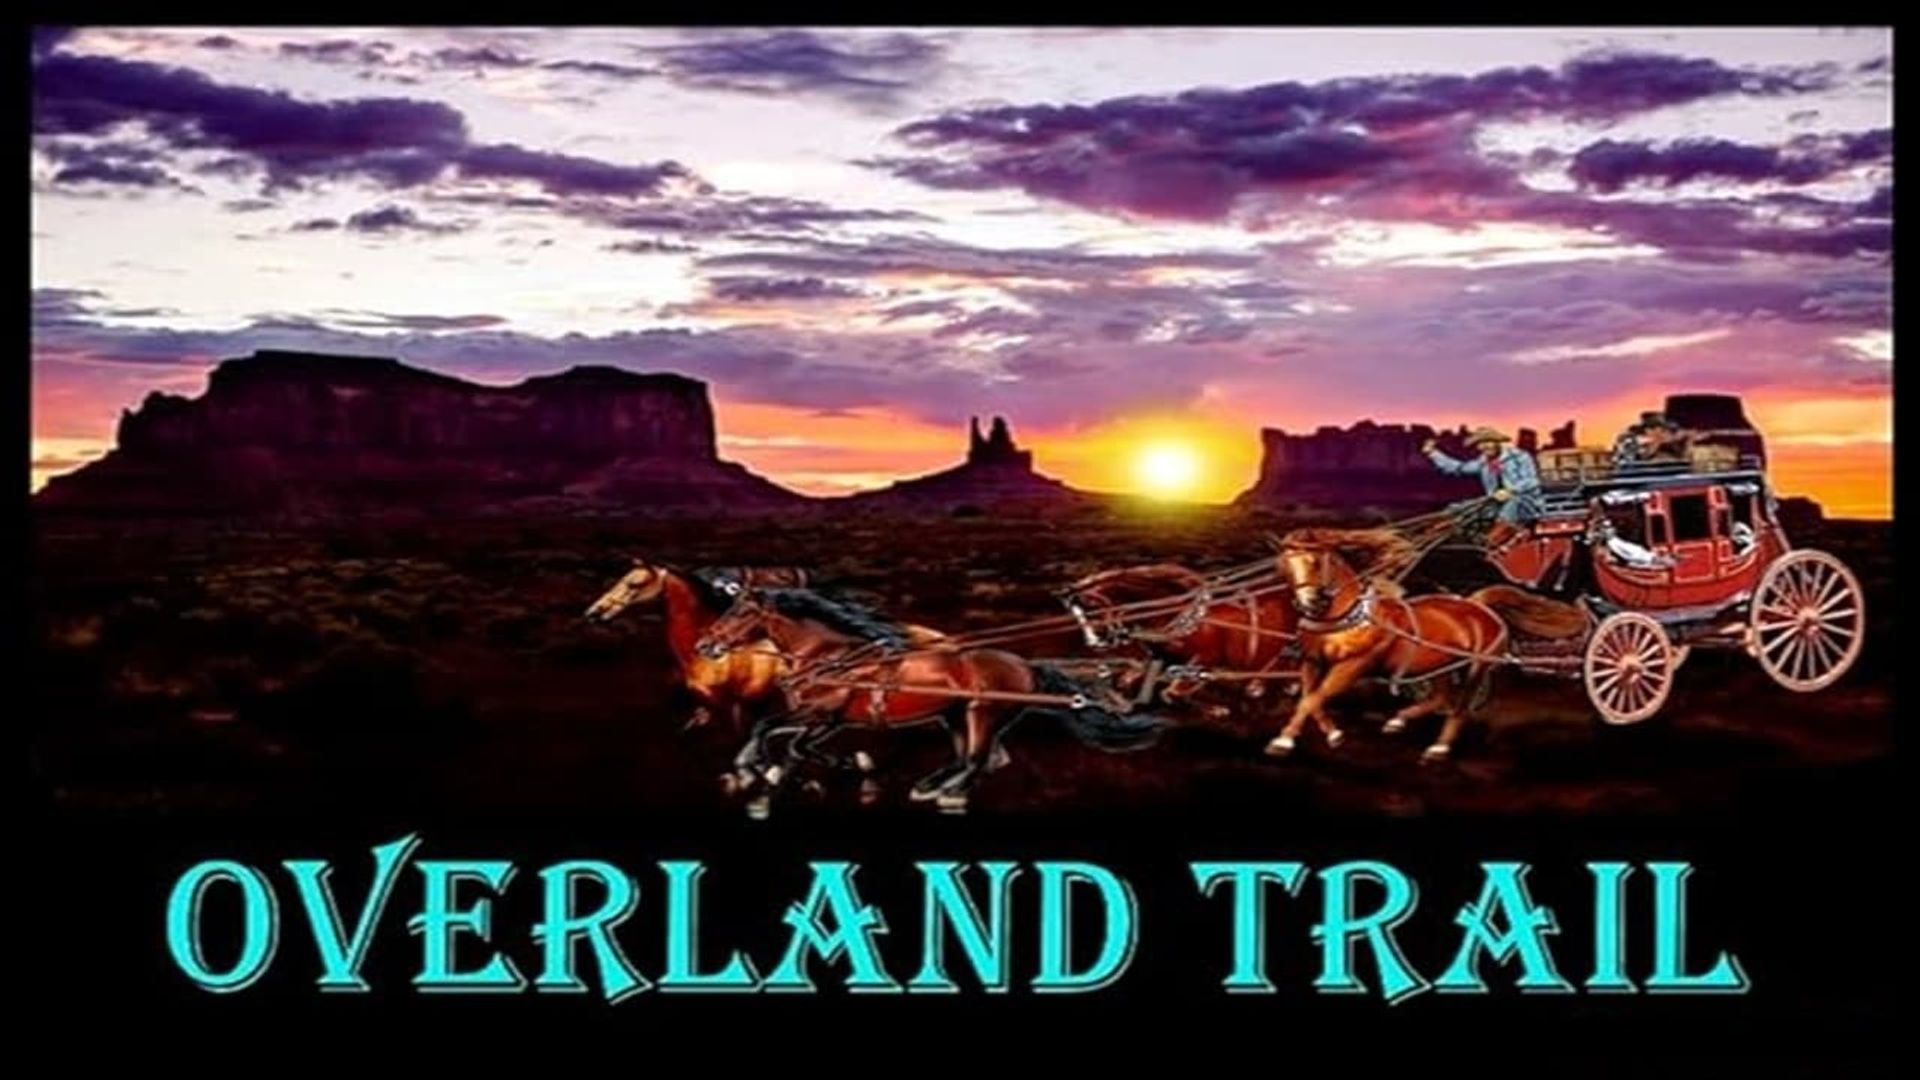 Overland Trail background